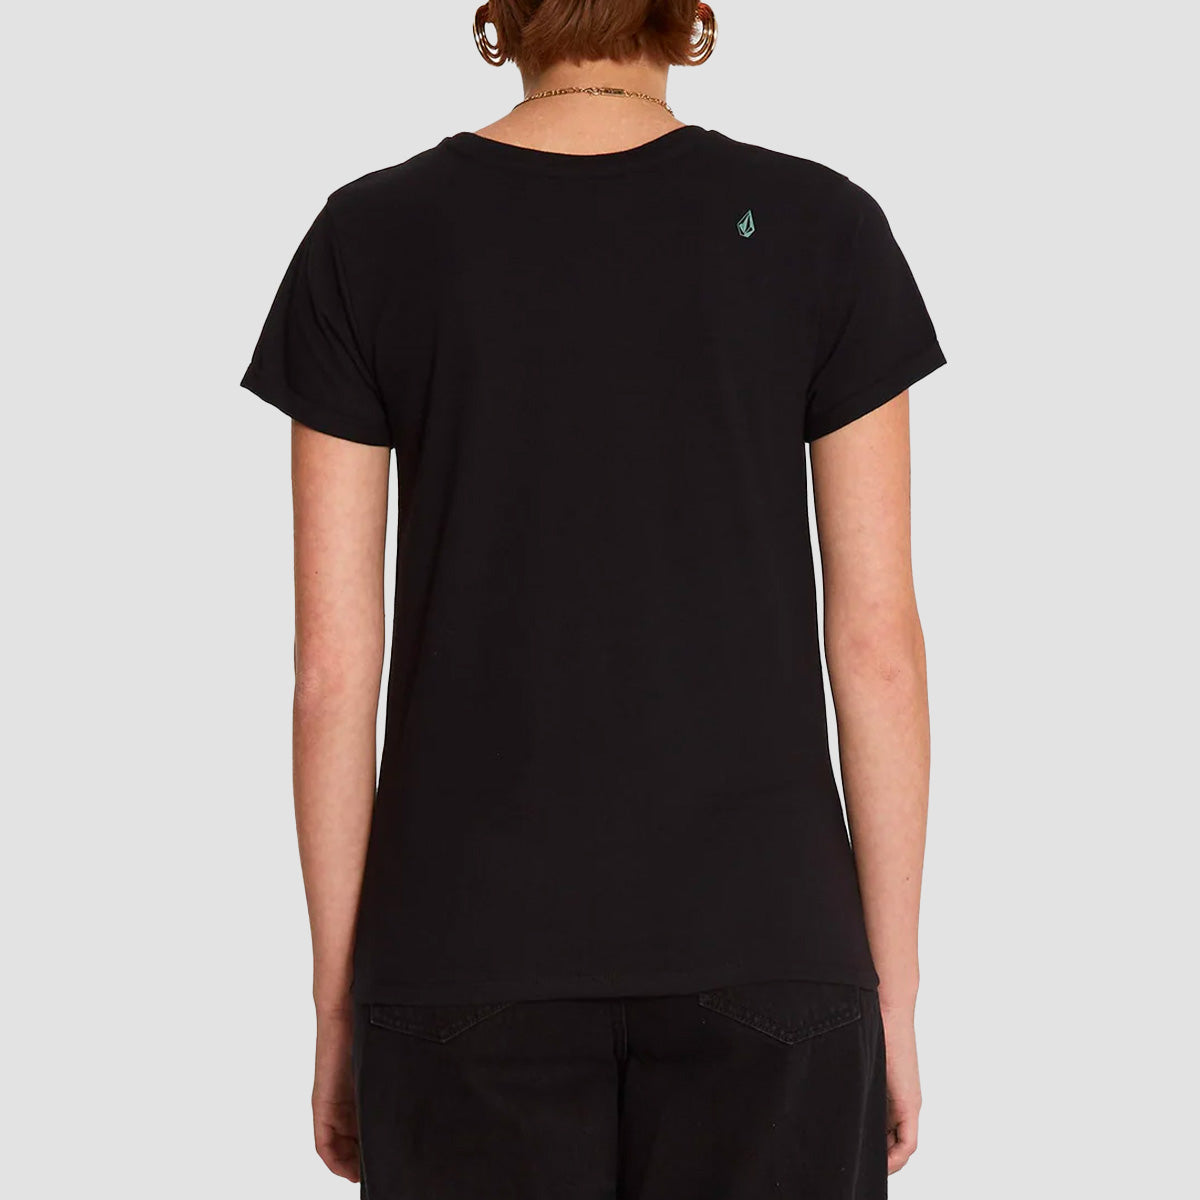 Volcom Radical Daze 2 T-Shirt Black - Womens